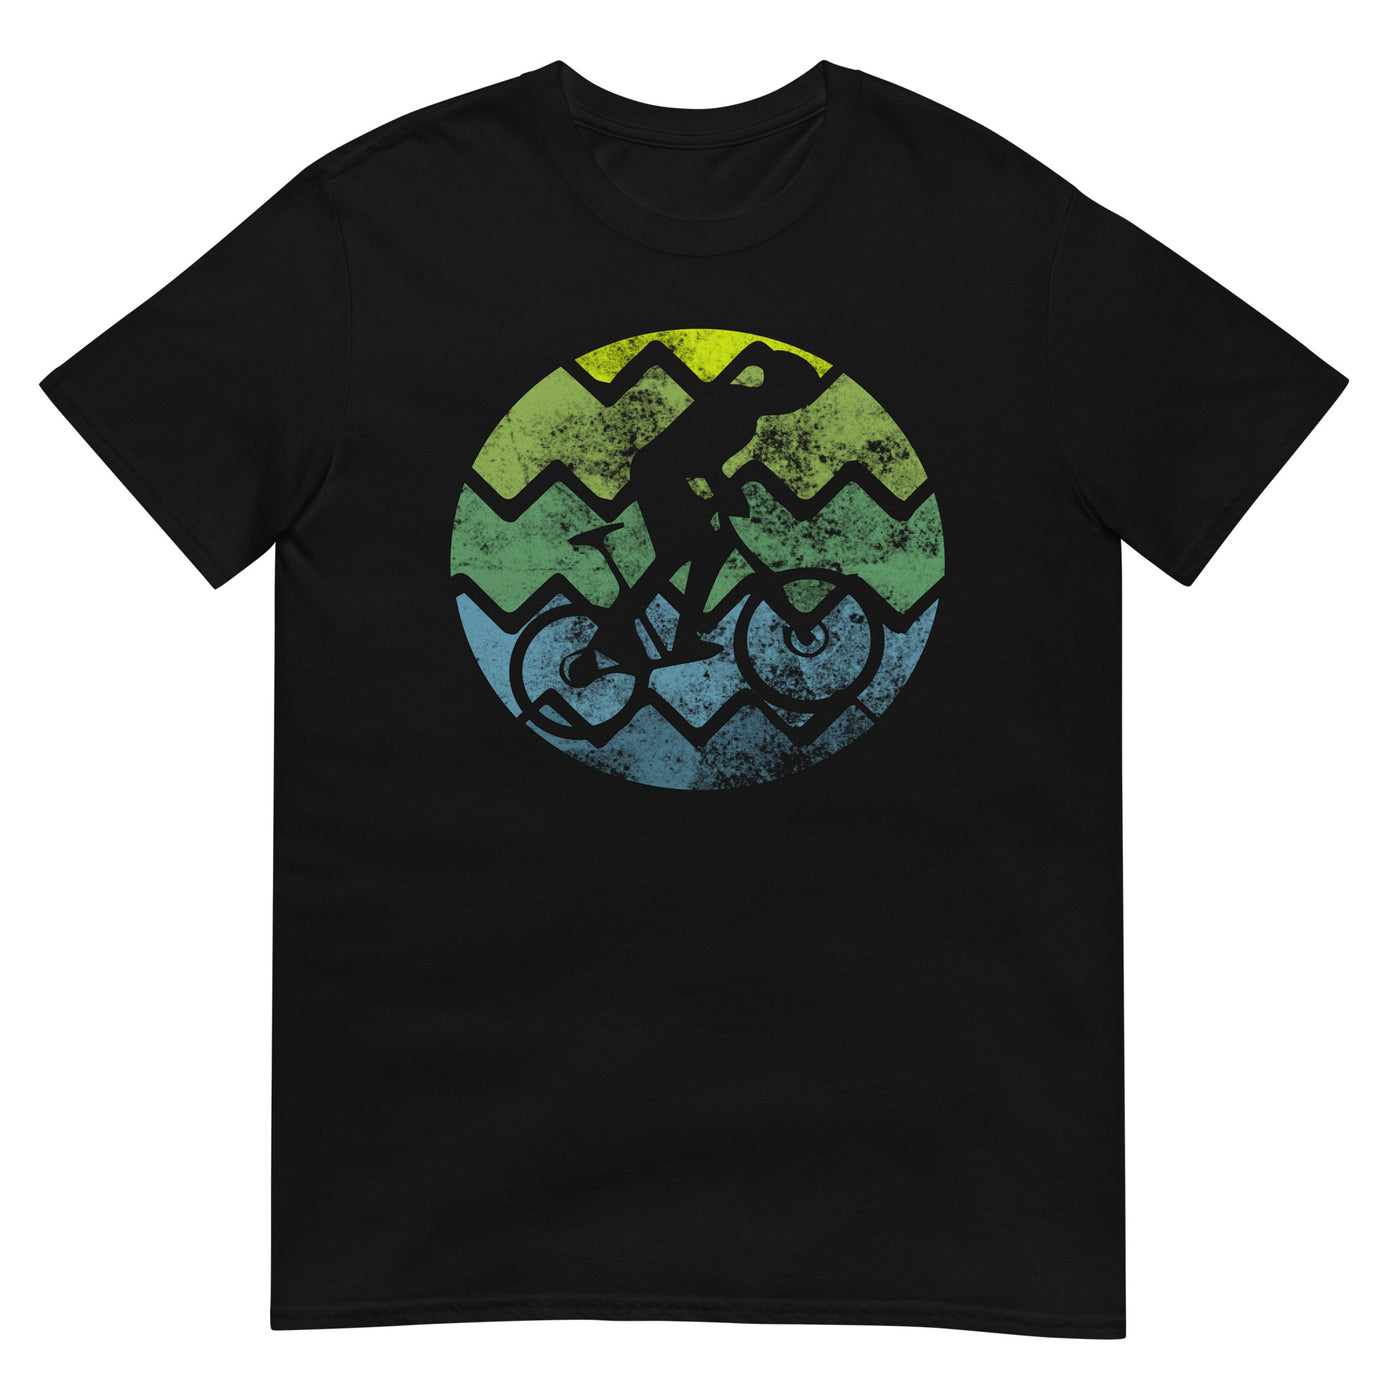 Retro - Radfahren - T-Shirt (Unisex) fahrrad xxx yyy zzz Black